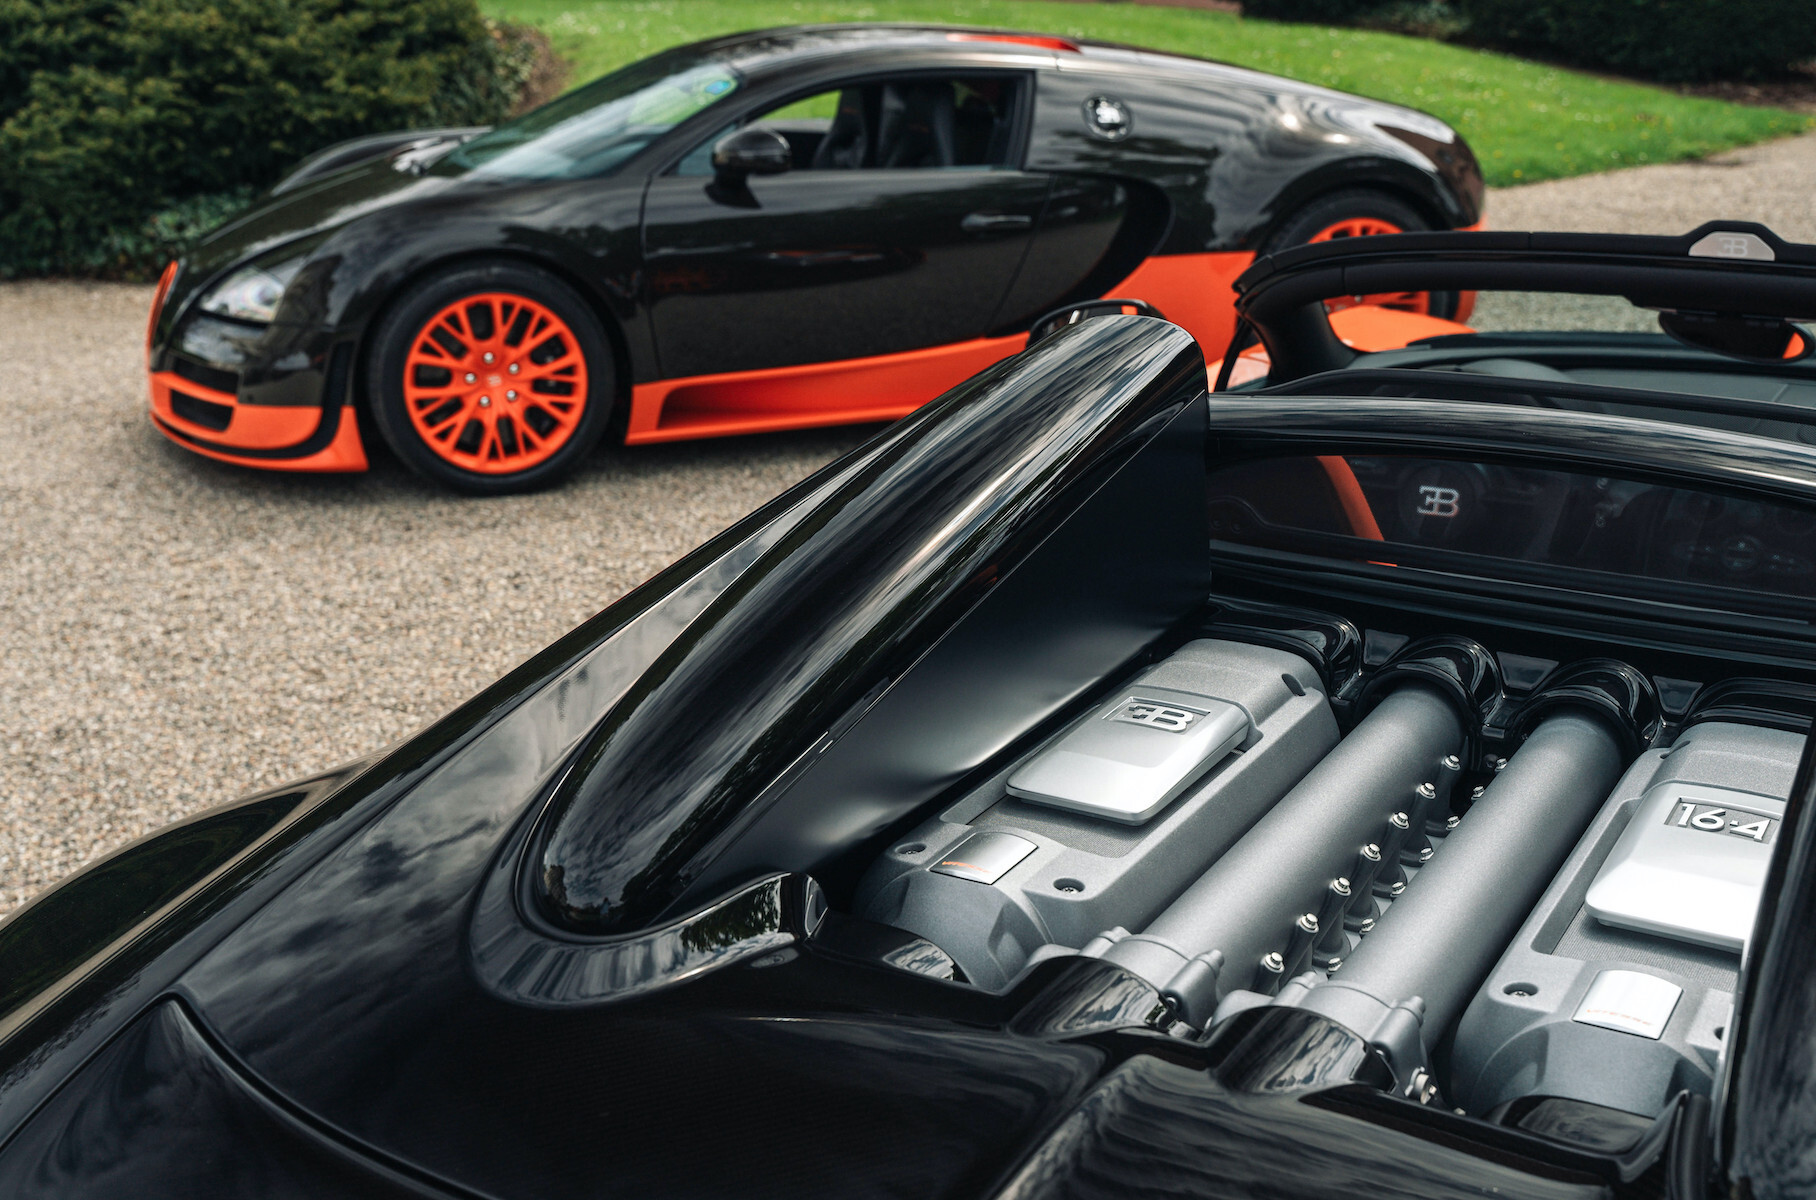 Bugatti Veyron 16.4 Grand Sport Vitesse, установил мировой рекорд скорости в 2013 году, разогнавшись до 408.84 км/ч